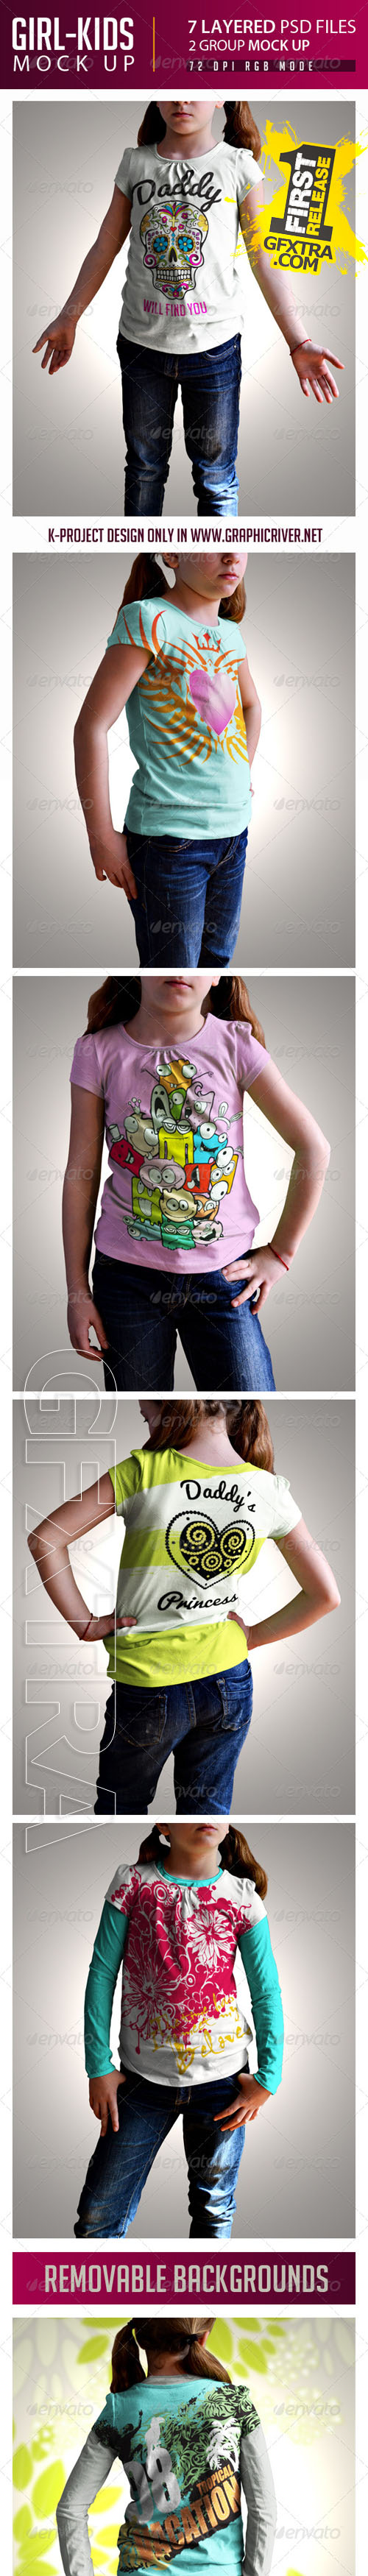 GraphicRiver - Girl Kids T-Shirt Mock Up 7204419